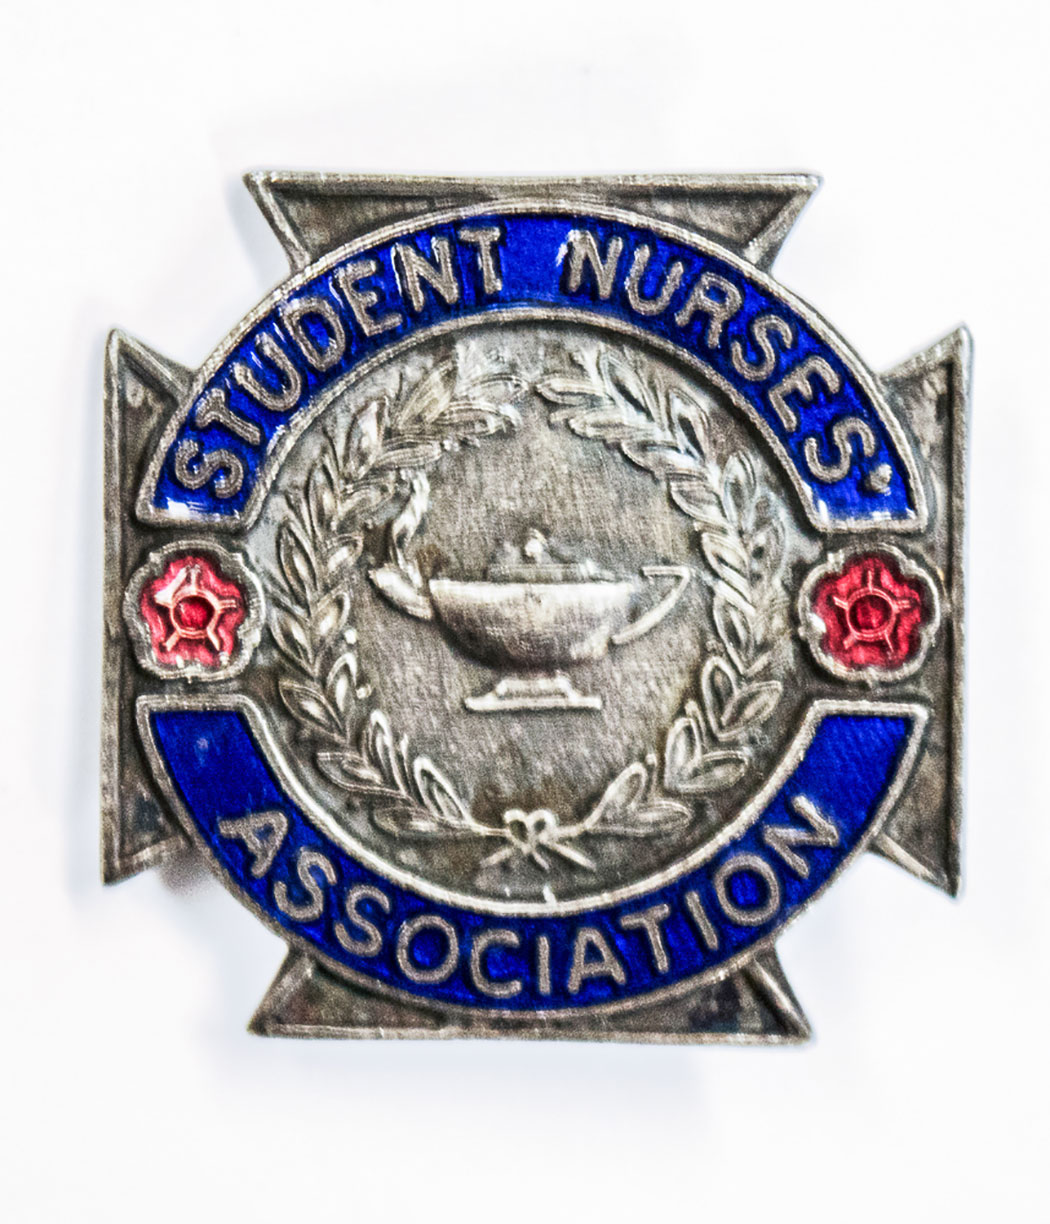 2019.39.4 student nurses association badge